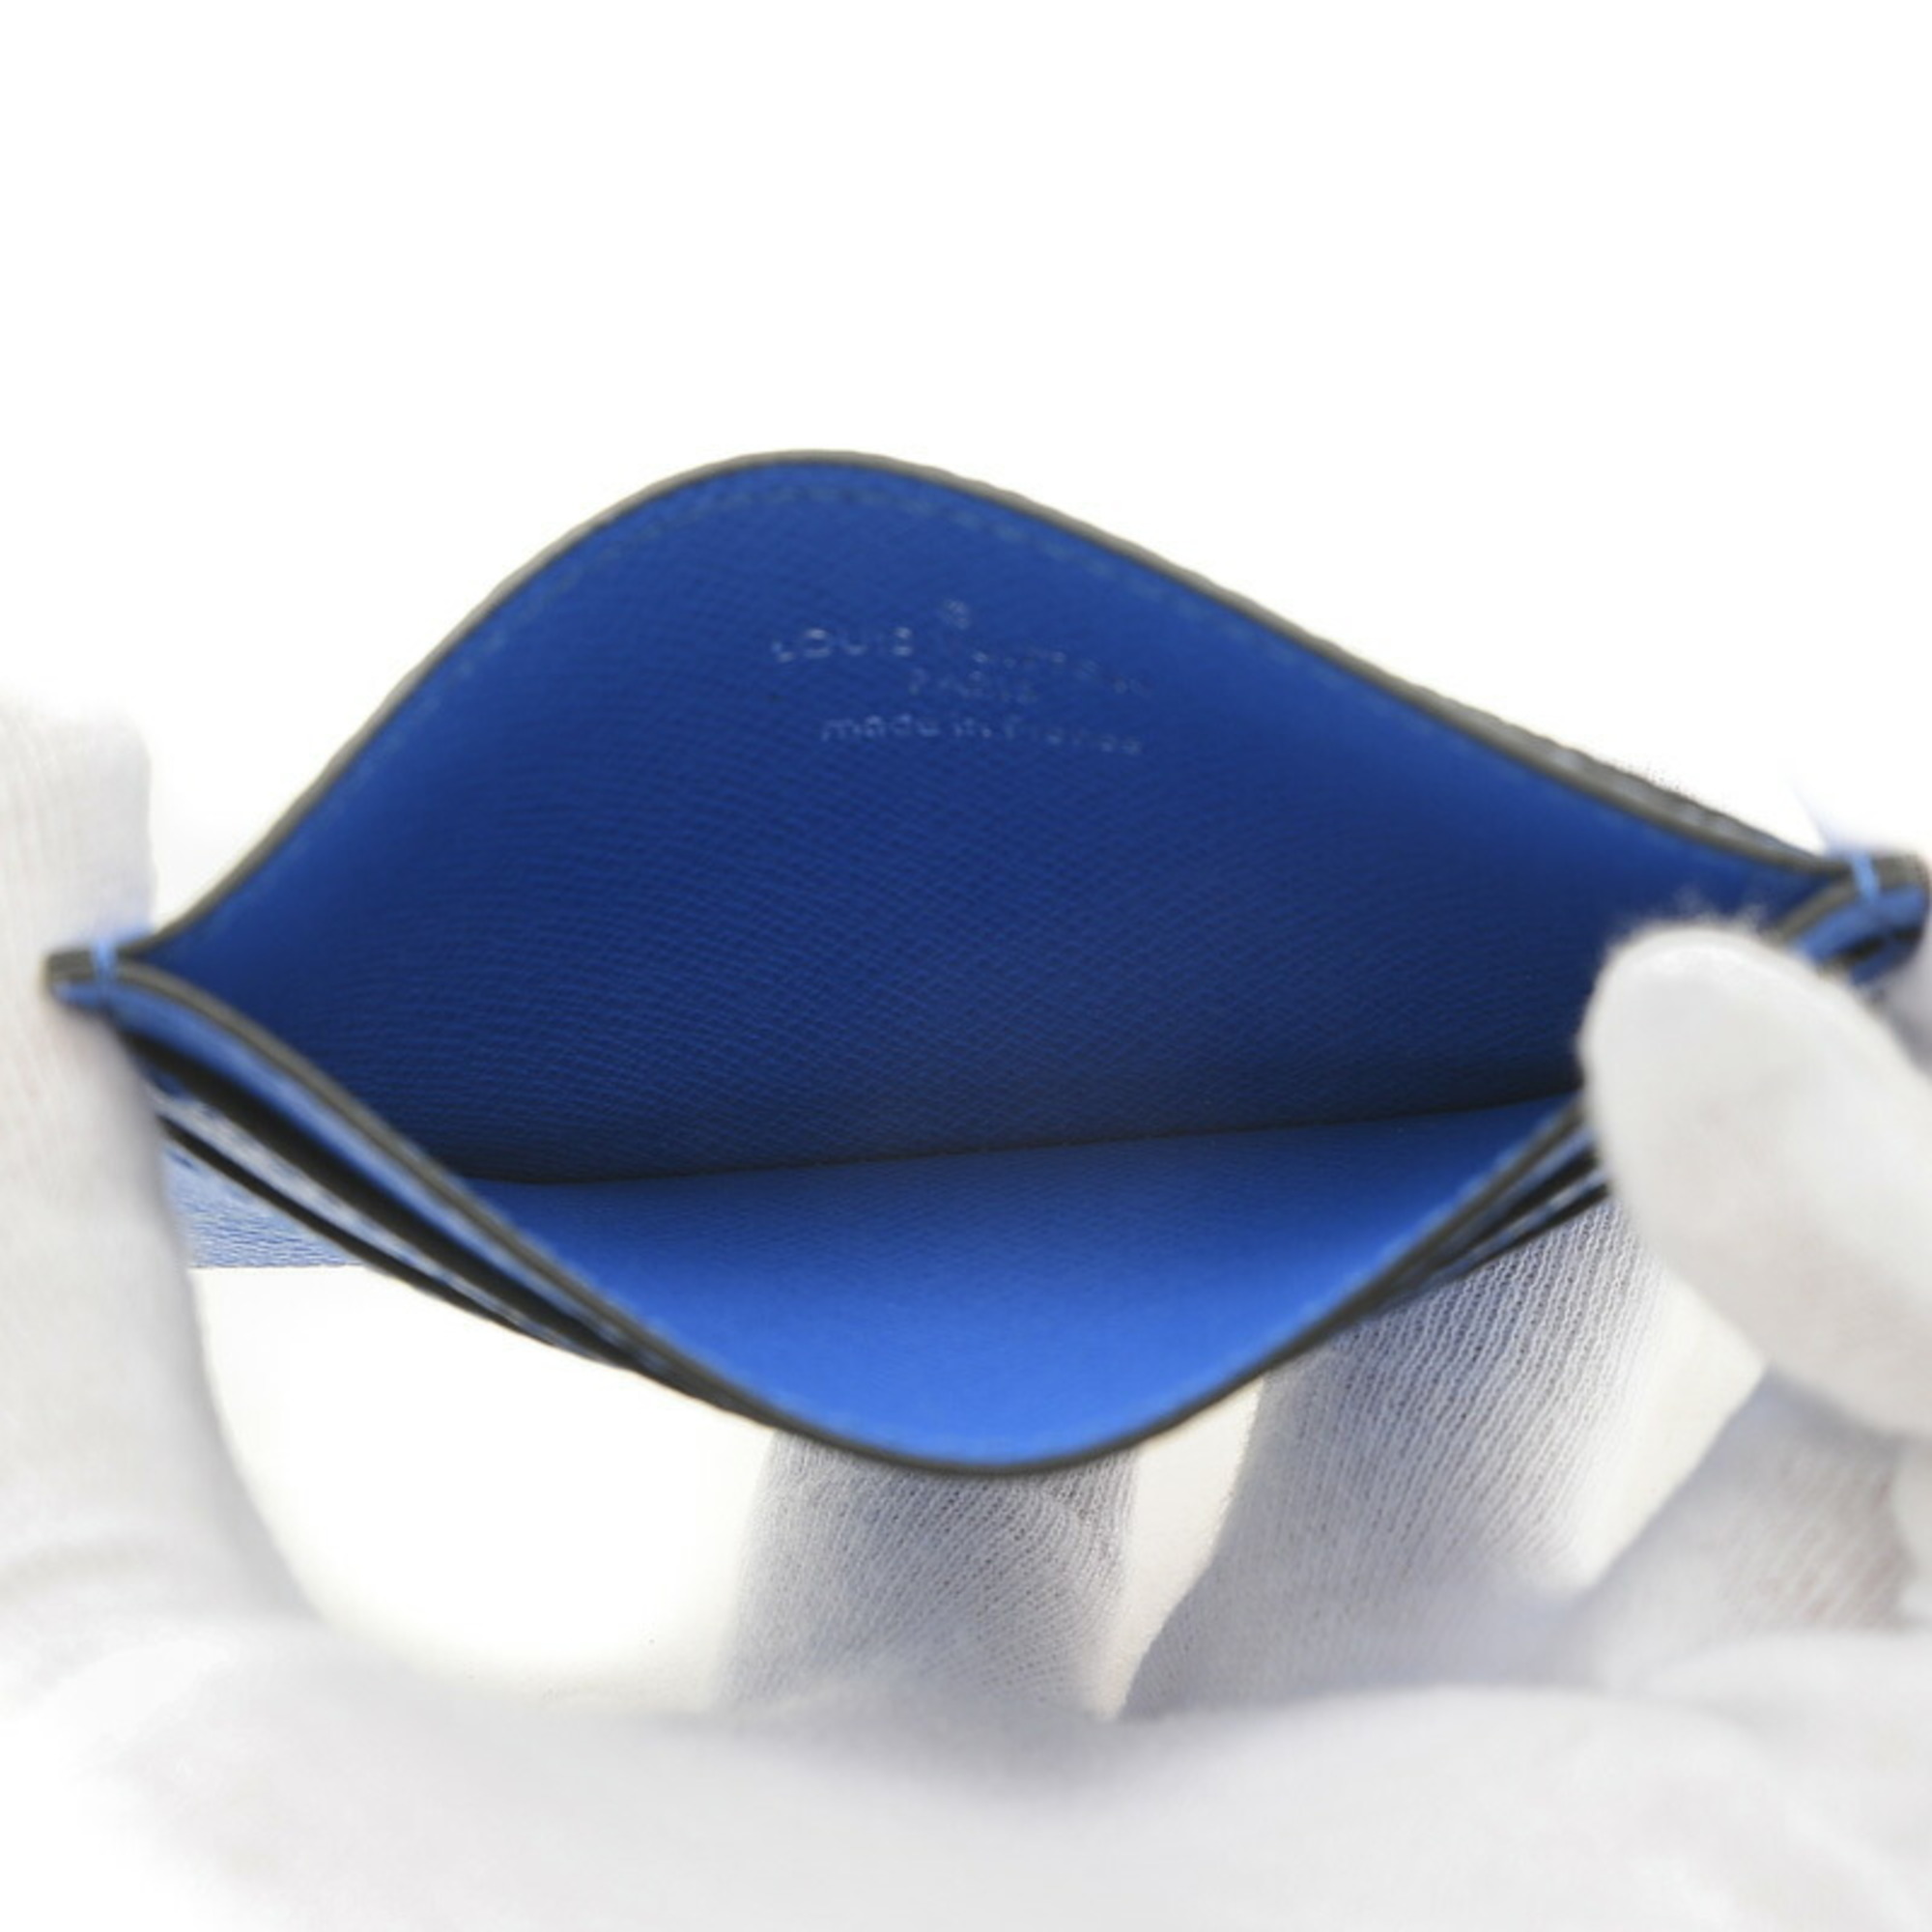 Louis Vuitton Taigarama Porto Carte Double Business Card Holder/Card Case Blue M31051